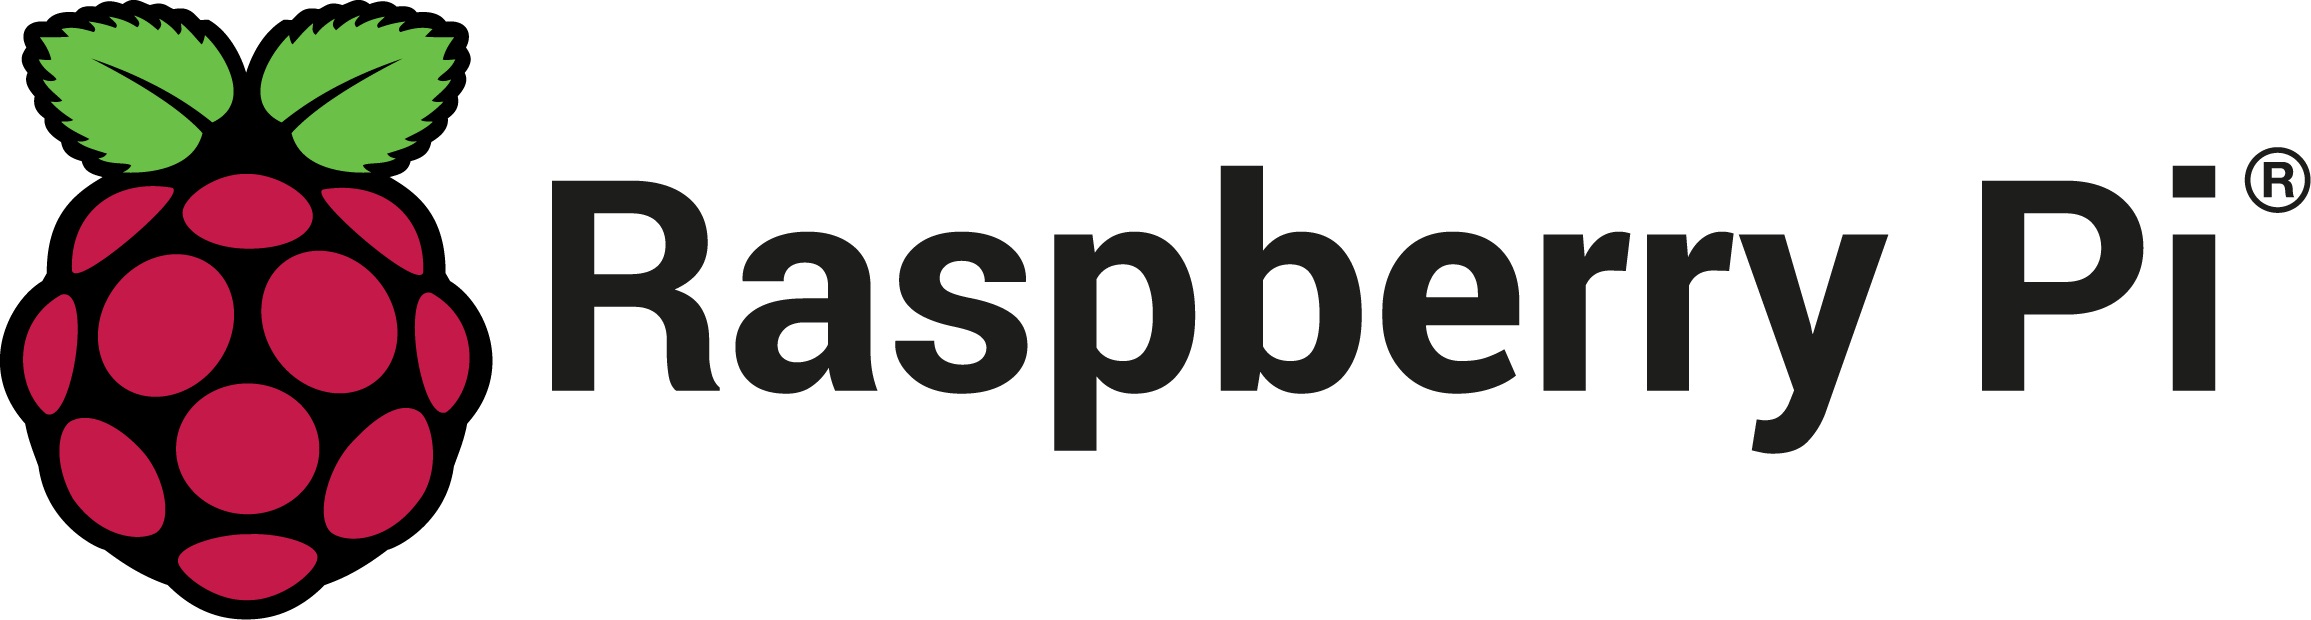 https://0201.nccdn.net/1_2/000/000/0c7/051/raspberry-pi-logo.jpg